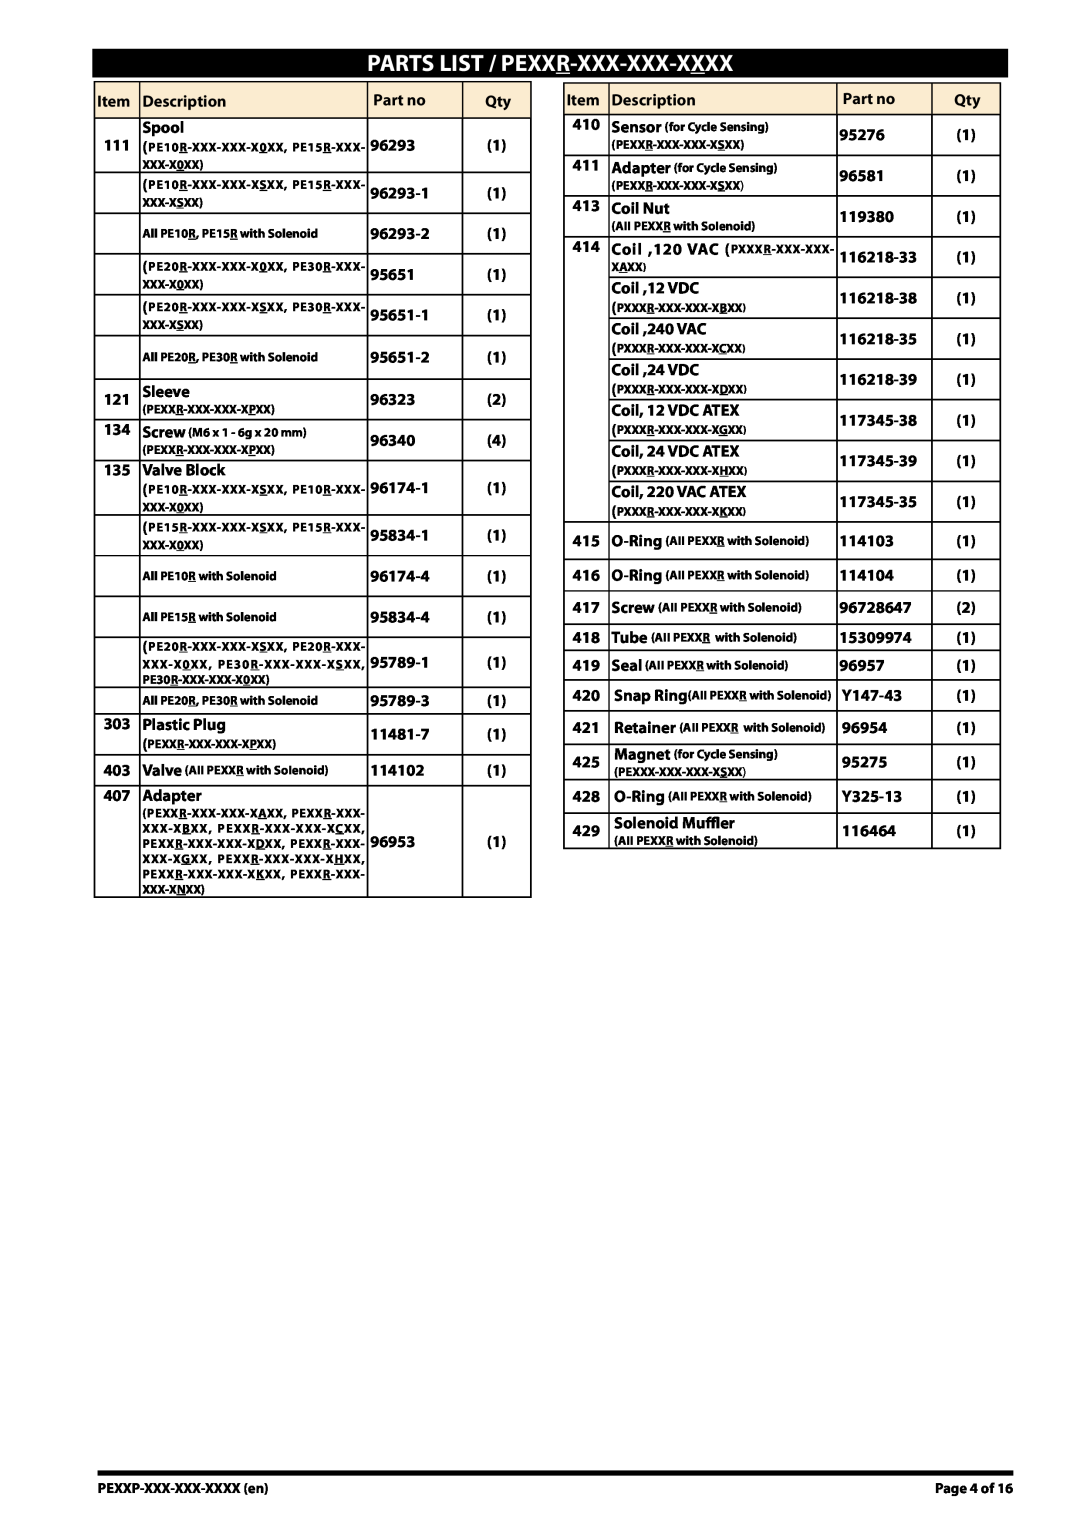 Ingersoll-Rand PE30X-XXX-XXX-XXXX, PE10X-XXX-XXX-XXXX Parts List / Pexxr-Xxx-Xxx-Xxxx, Snap RingAII PEXXR with Solenoid 